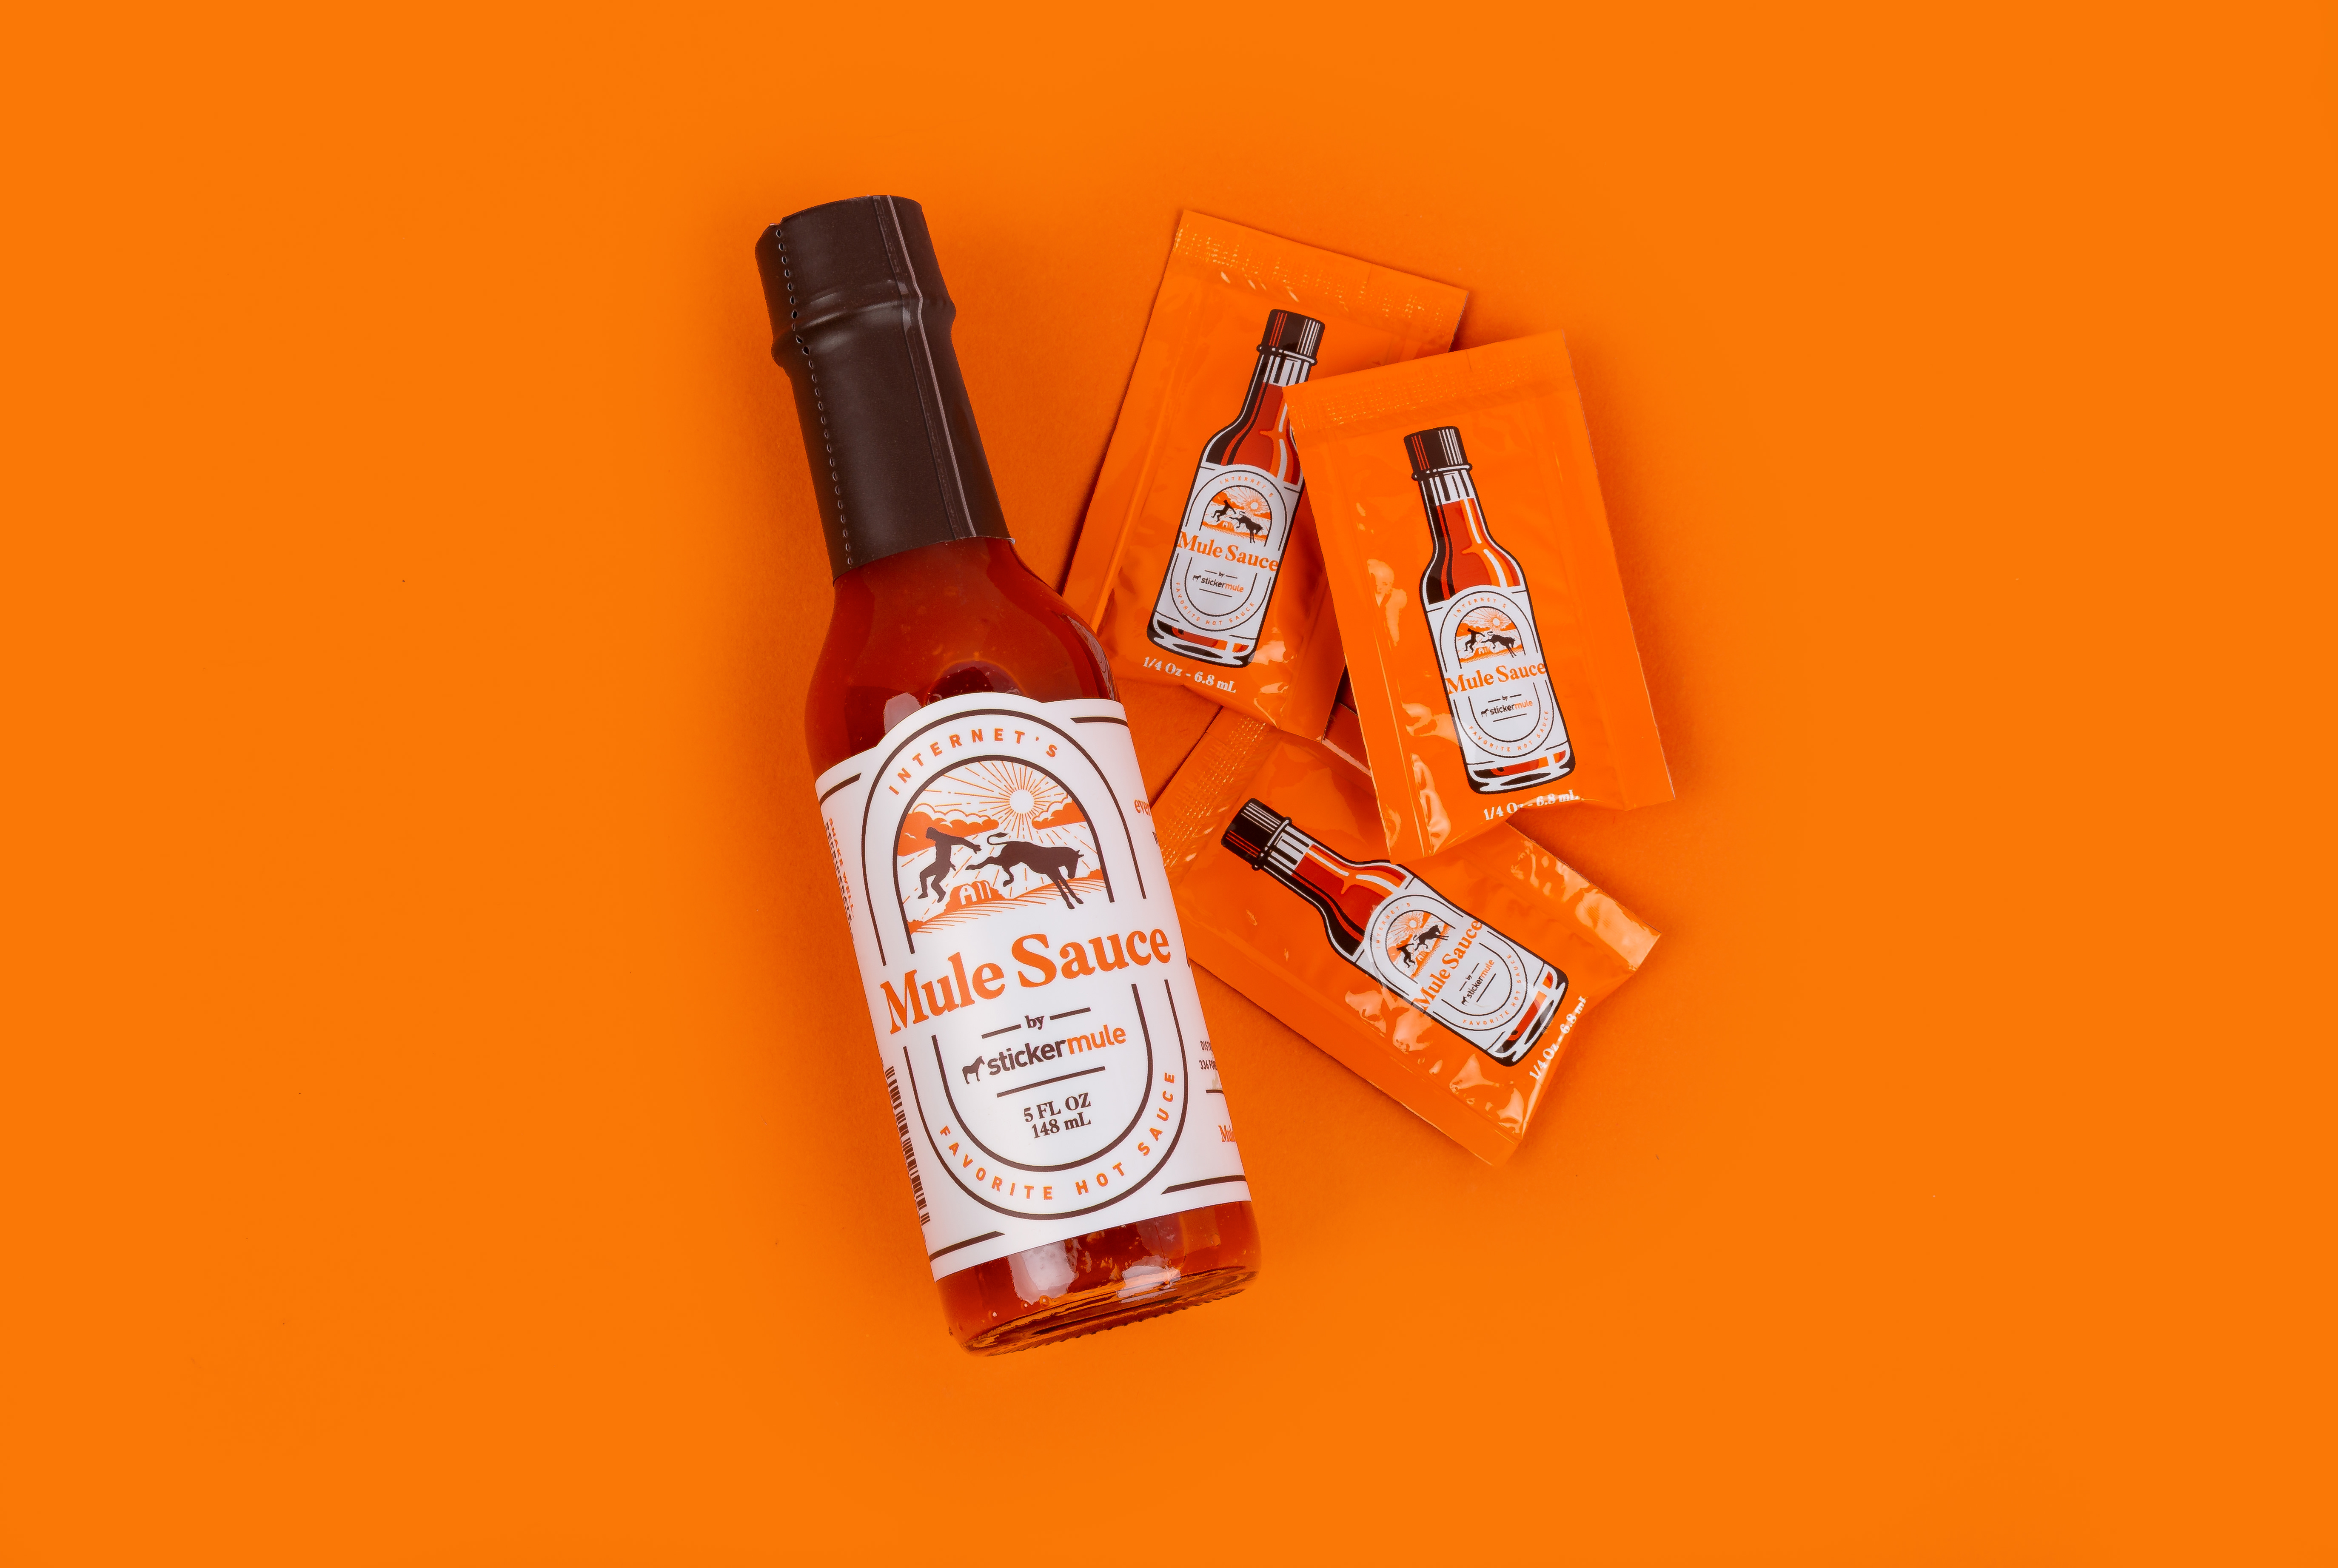 botella de salsa picante mule sauce junto a sobres de mule sauce sobre fondo naranja